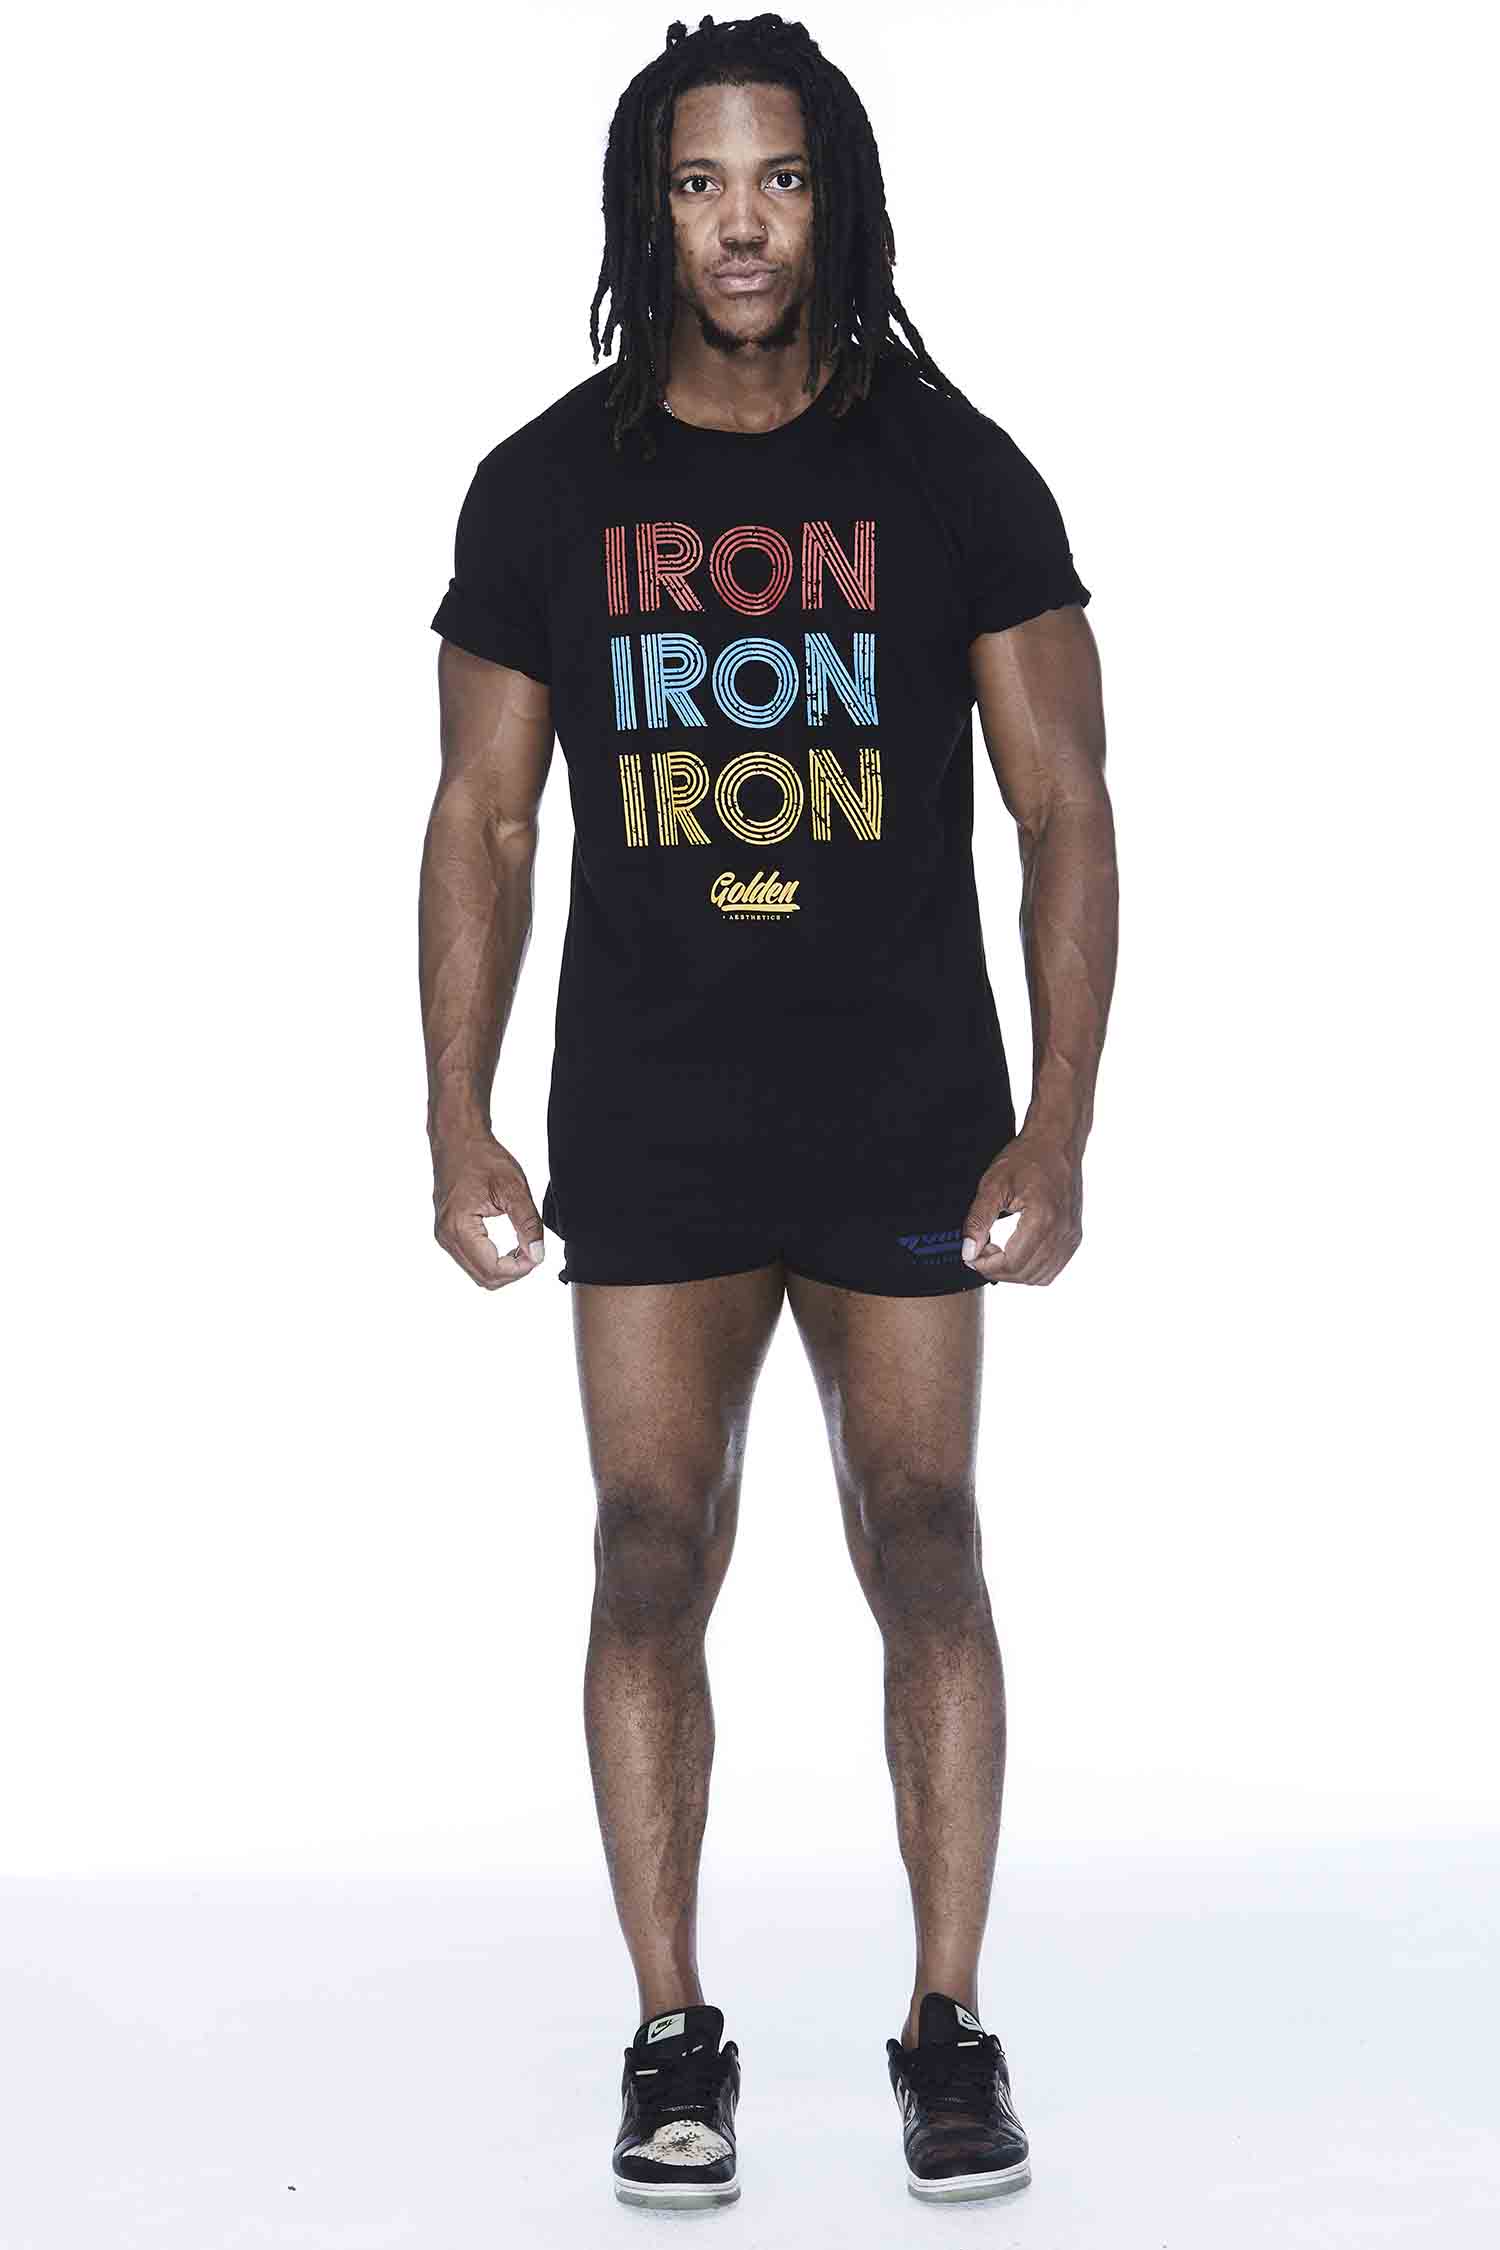 Black Iron Rolled Sleeve T-Shirt